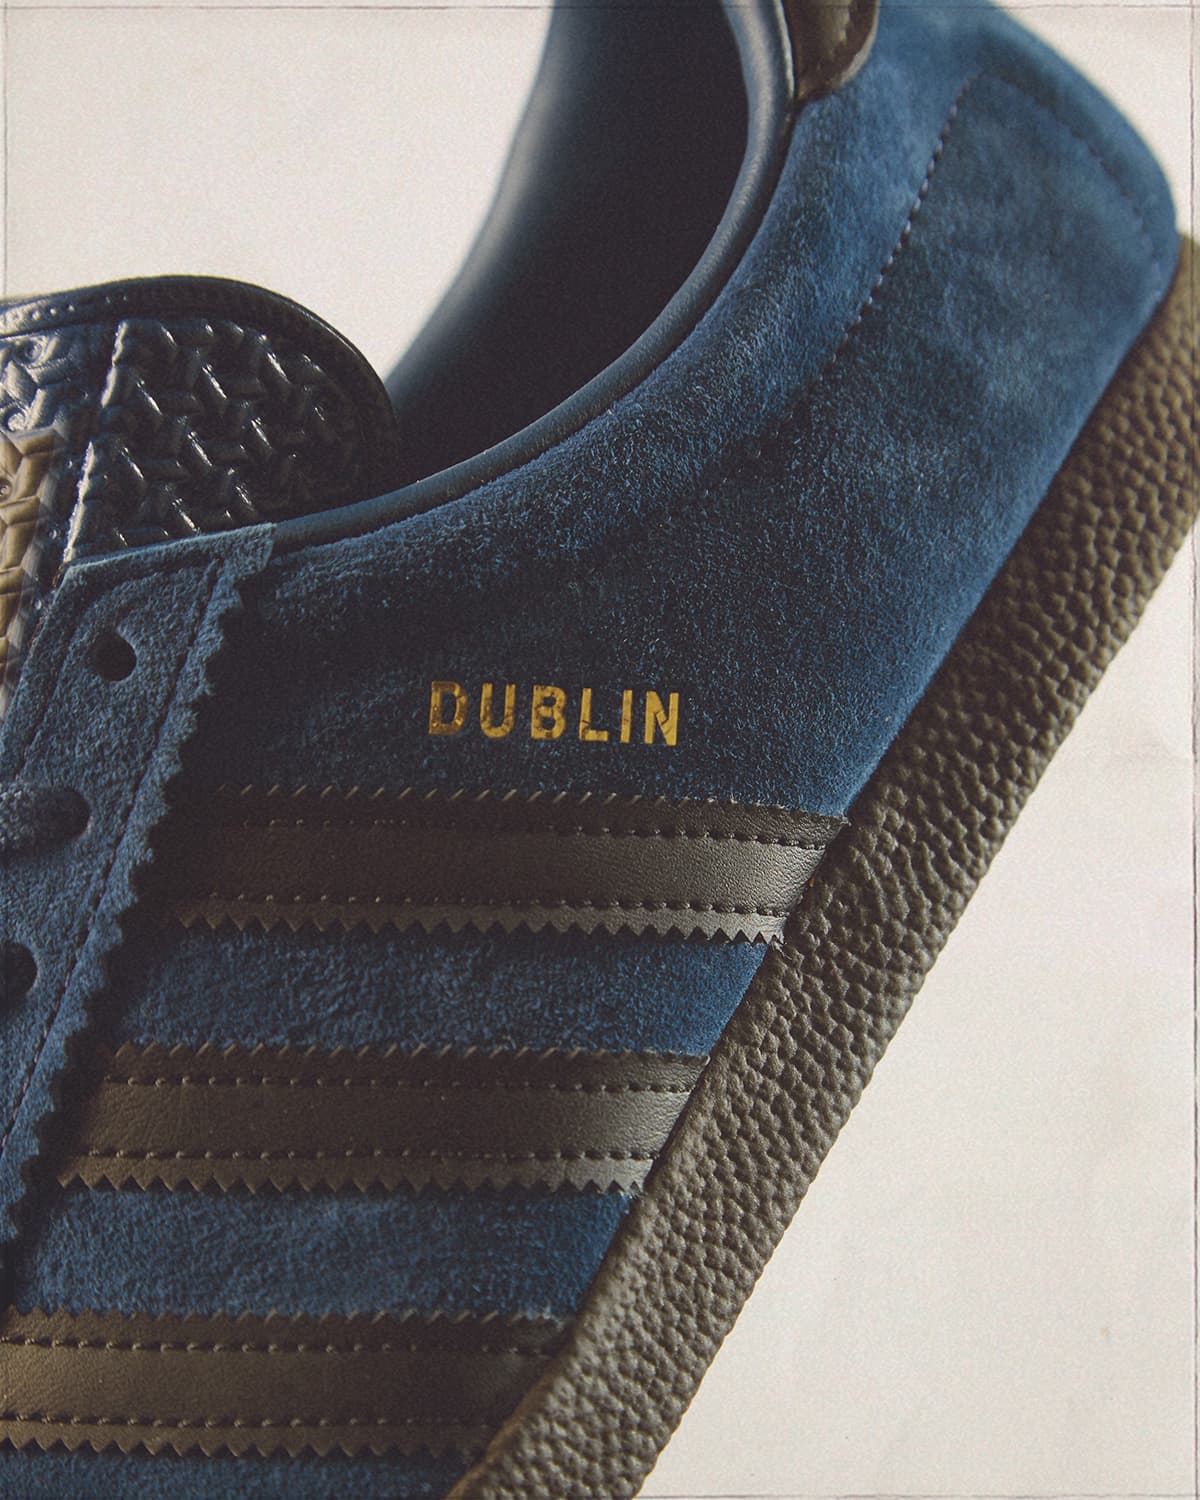 adidas Originals Archive Dublin Taiwan Size Exclusive 4